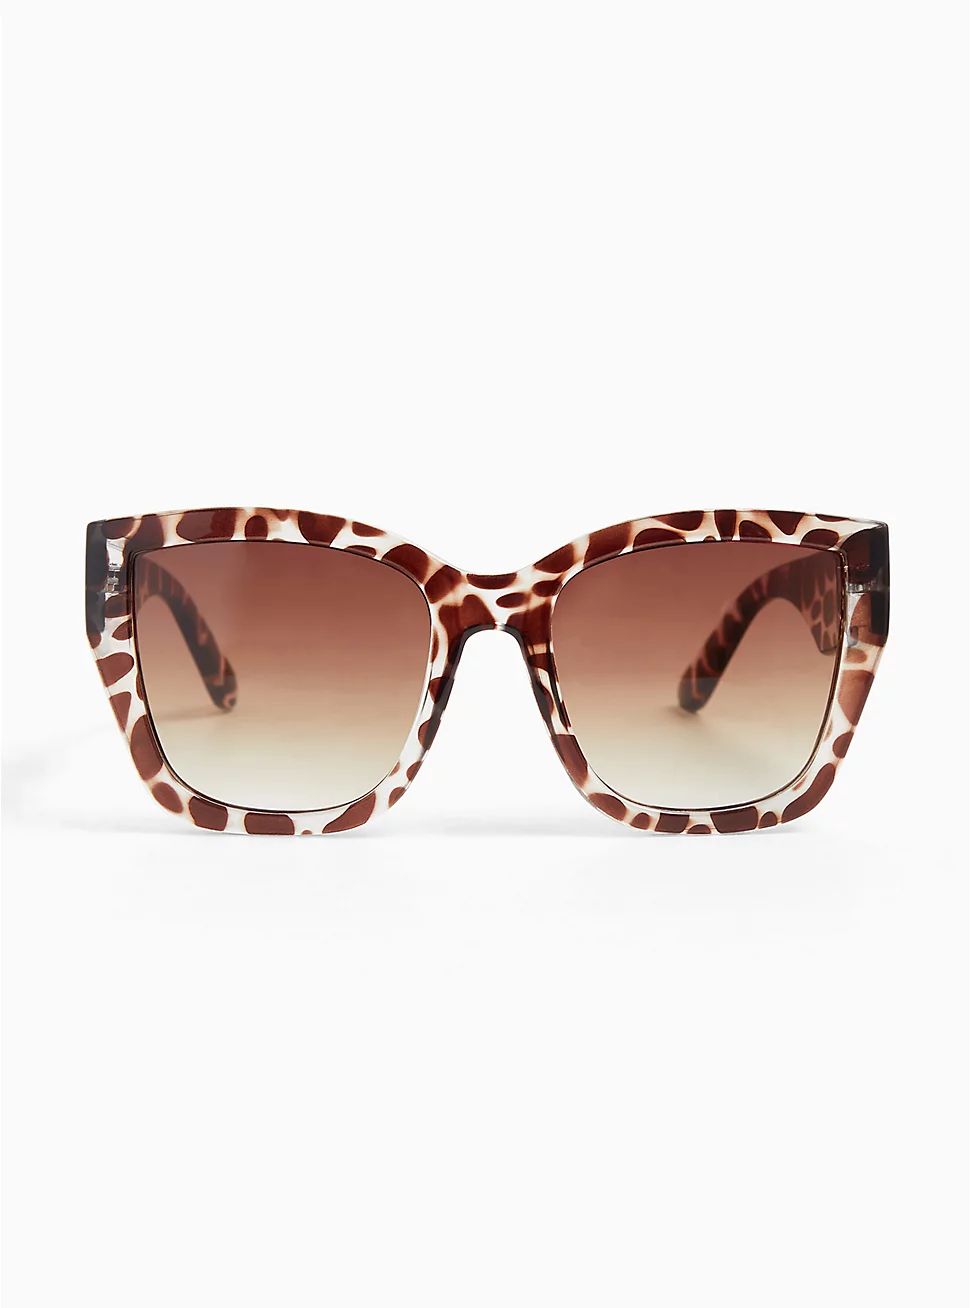 Animal Print Oversized Sunglasses | Torrid